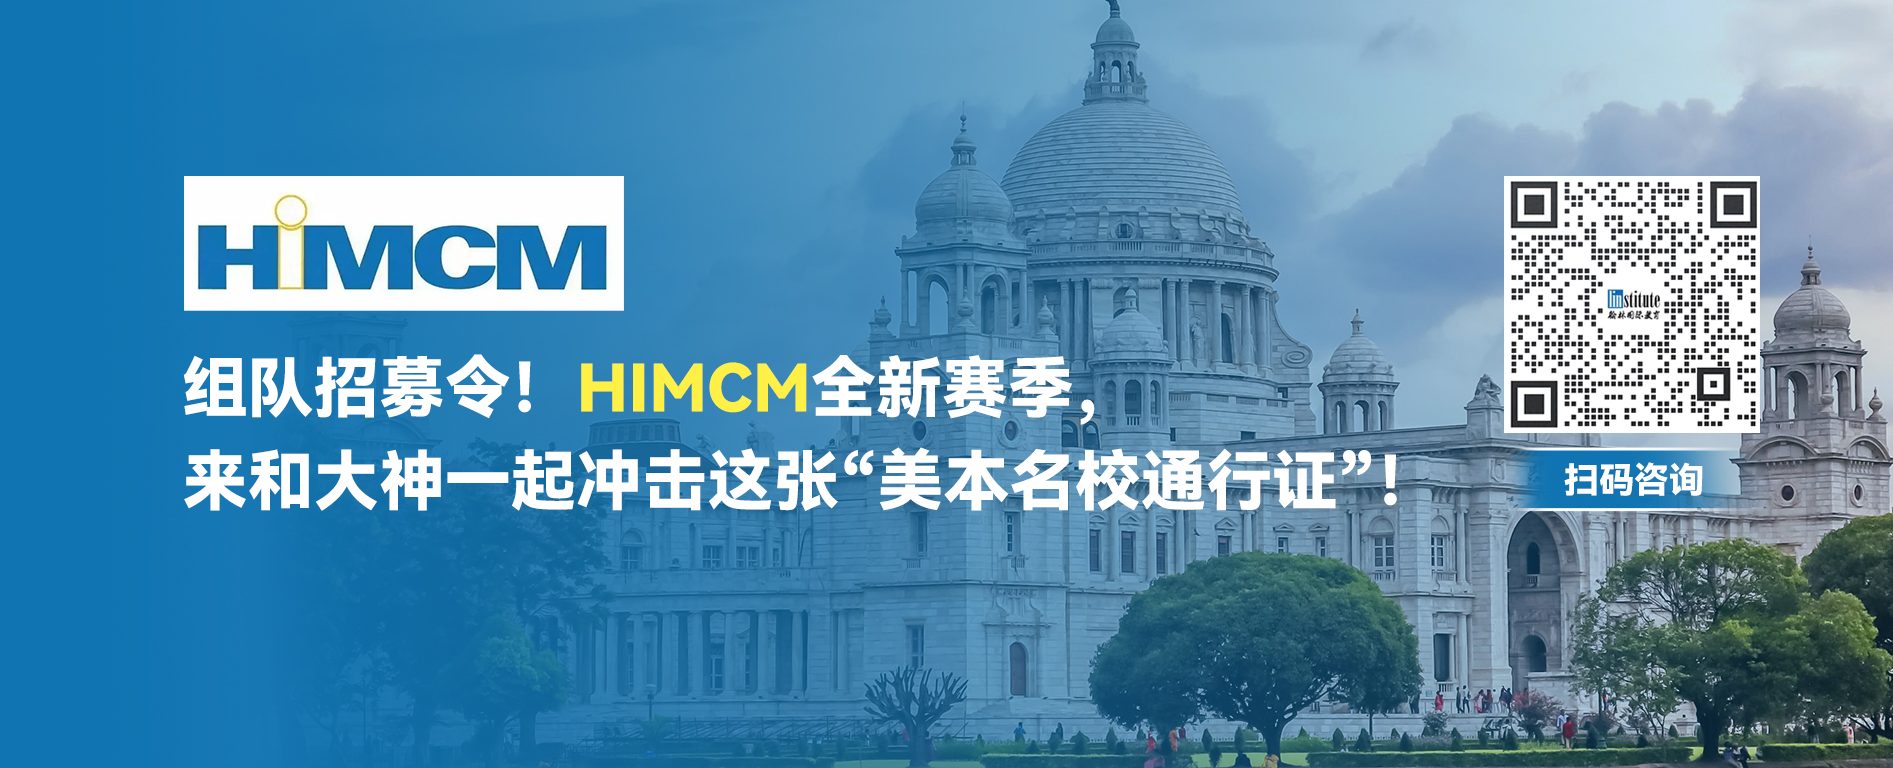 Himcm2